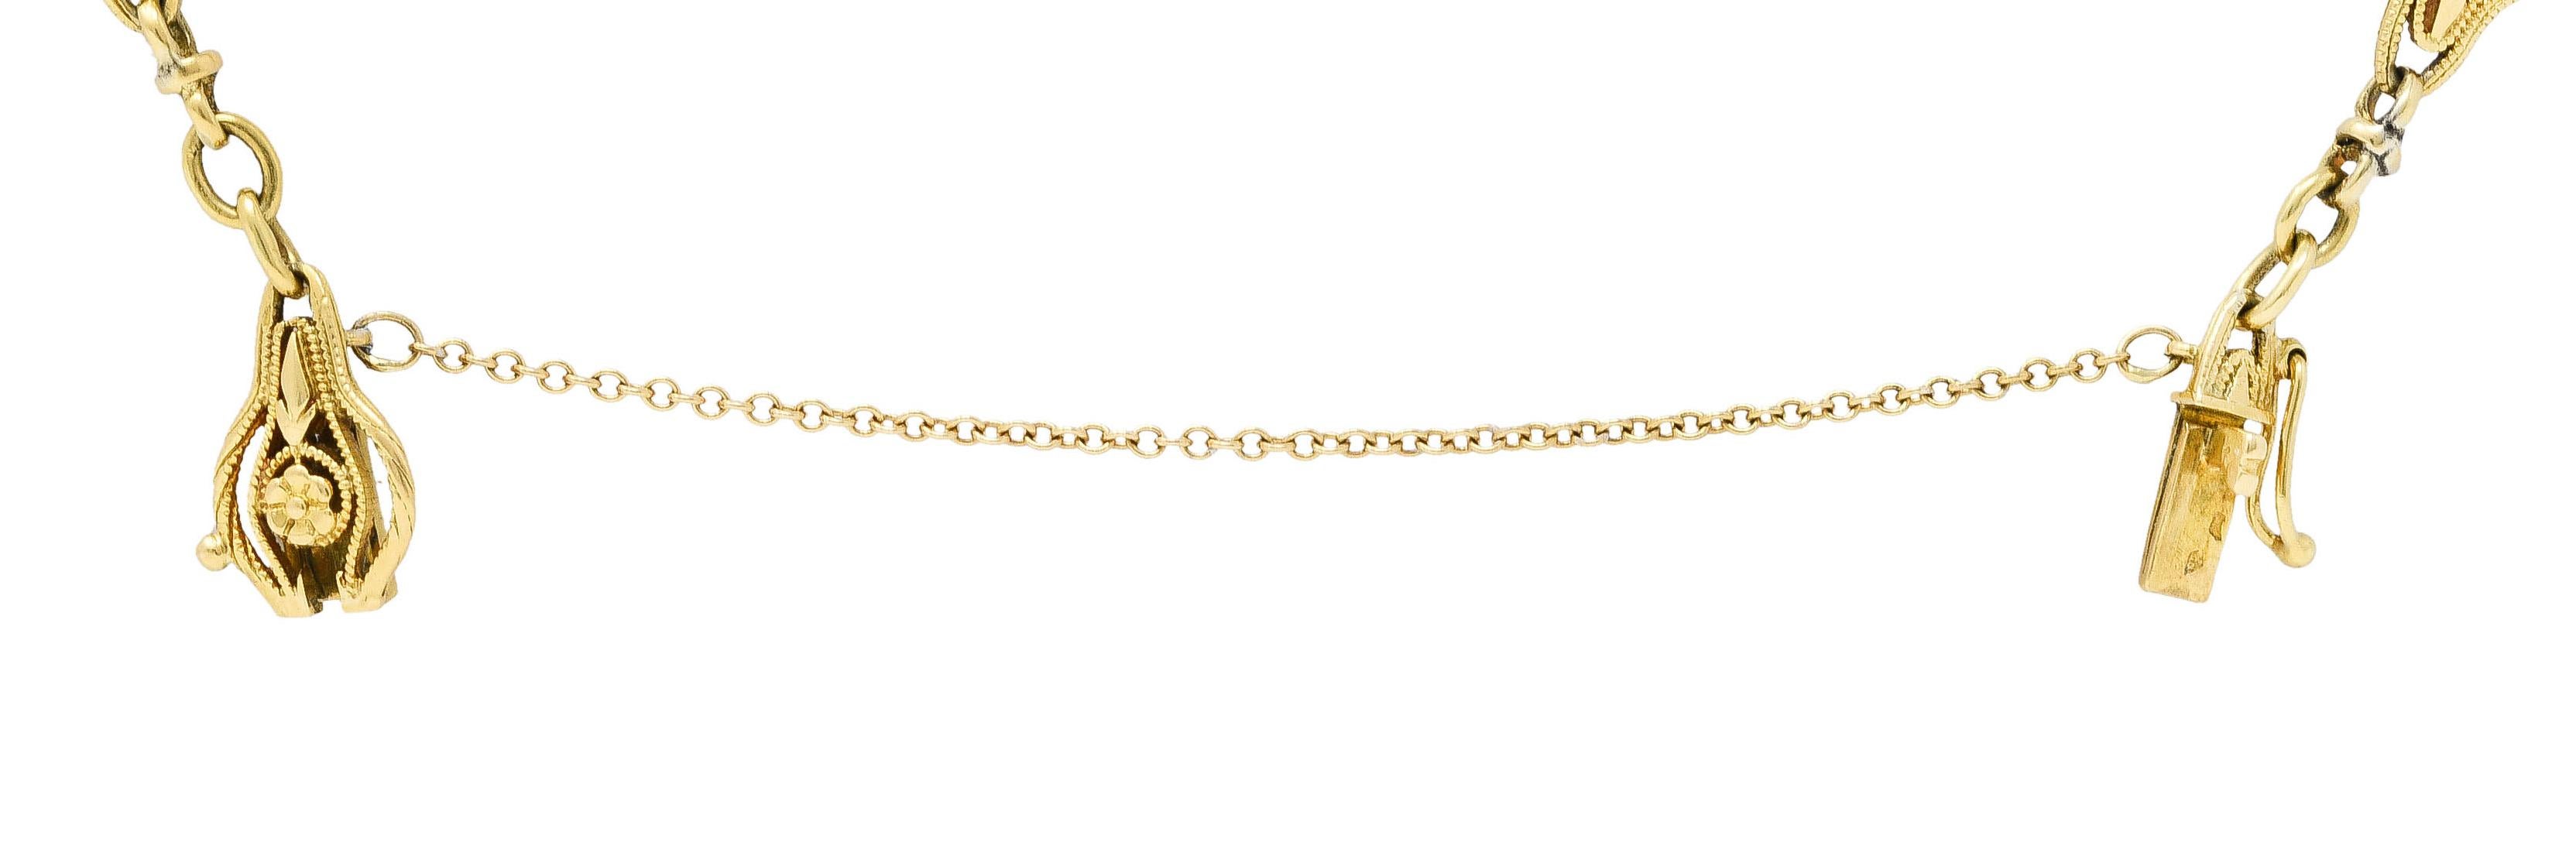 French Victorian 18 Karat Yellow Gold Floral Link Bracelet 4